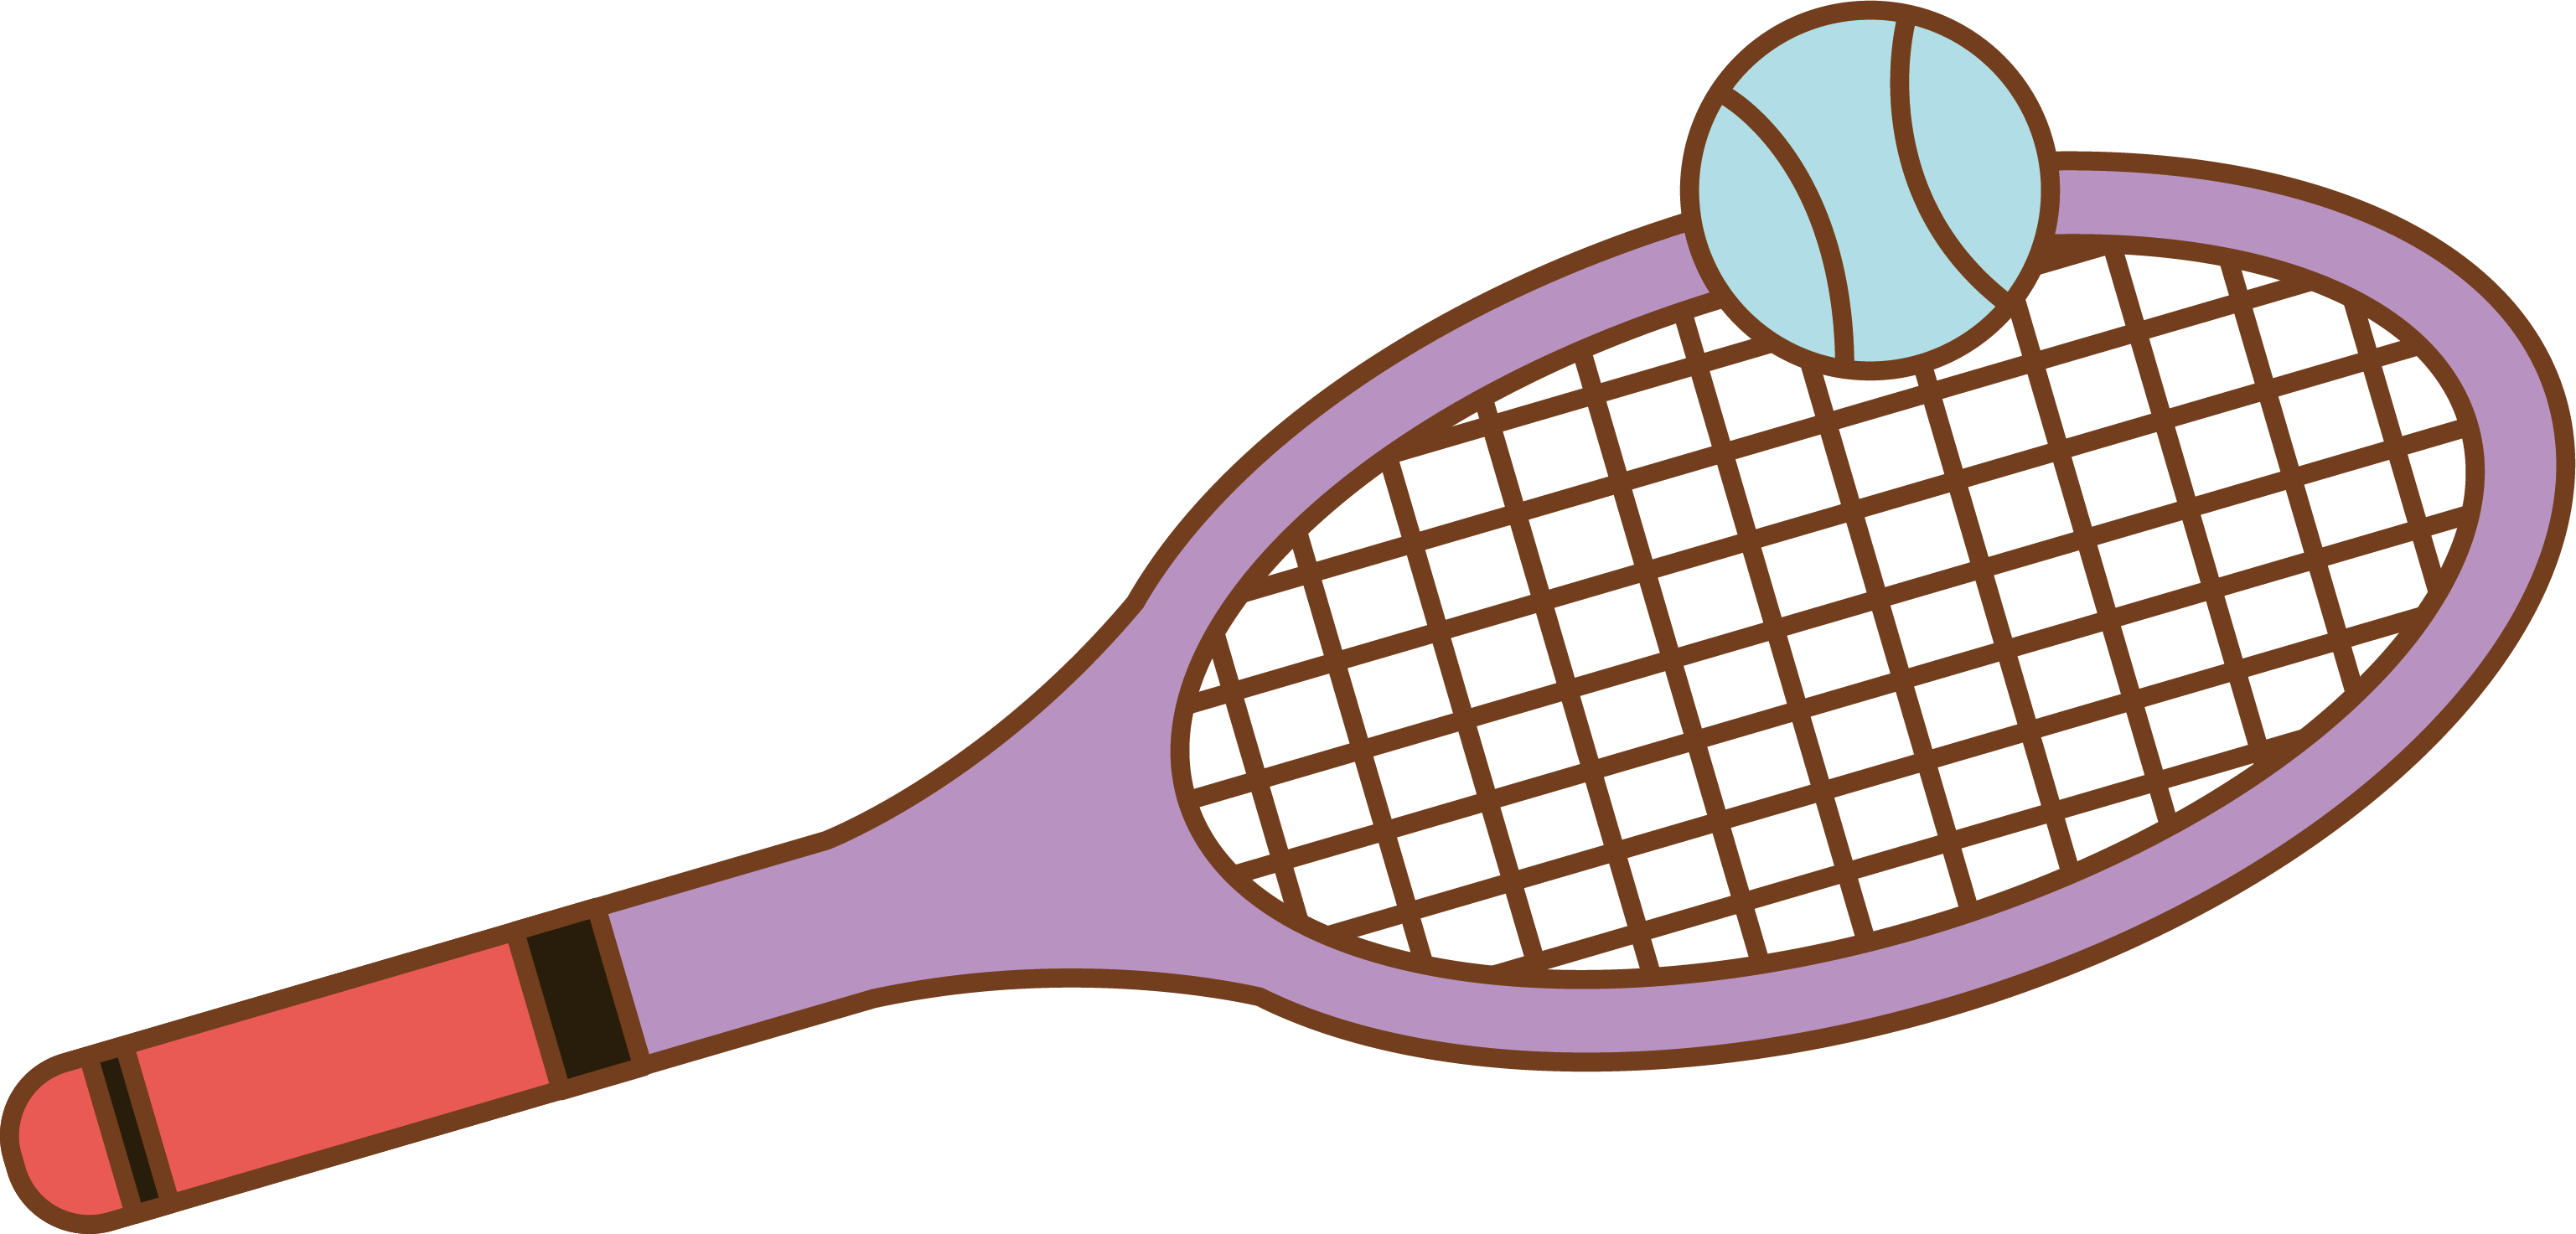 Tennis Racket Drawing at GetDrawings | Free download